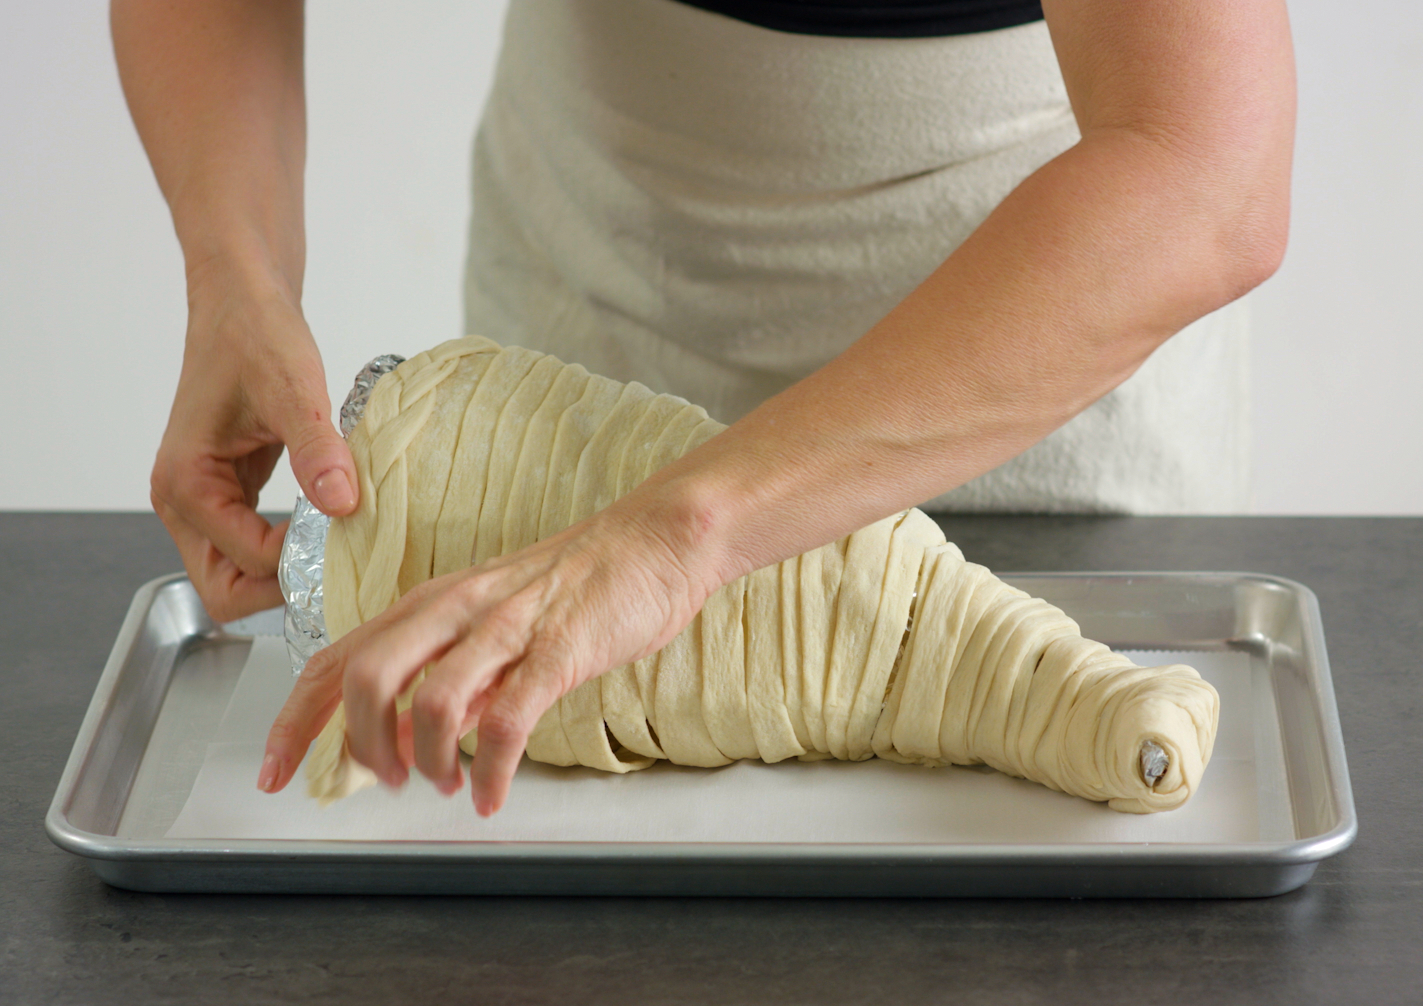 How to make a cornucopia from dough